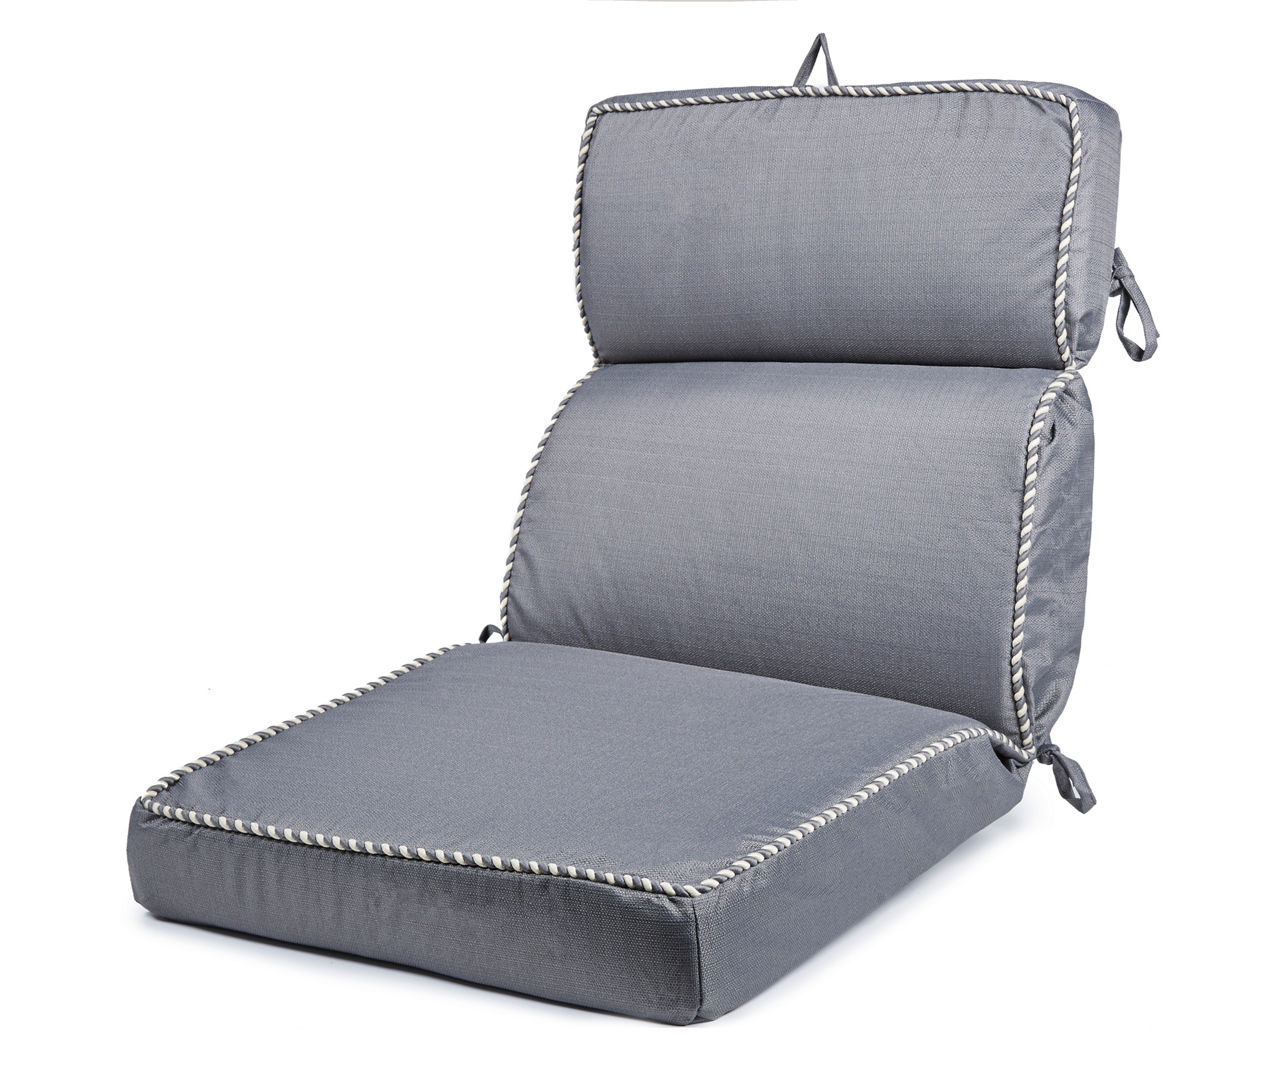 Gray Linen High-Back Outdoor Chair Cushion